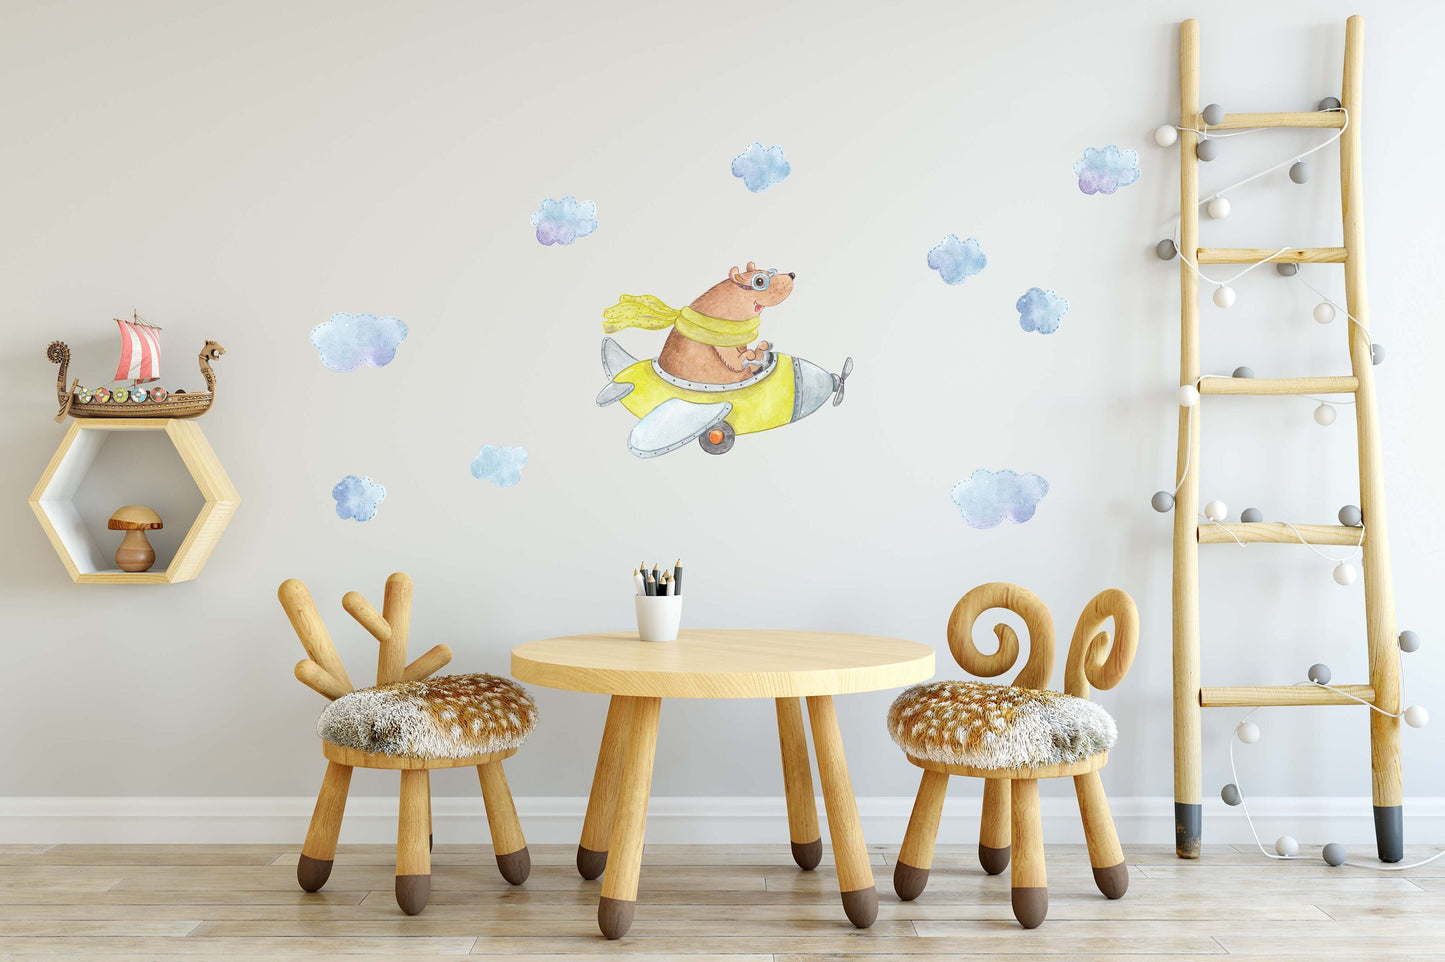 Bear Decals Airplane Wall Decor Fabric Nursery Toddler Room Animal Stickers, LF029